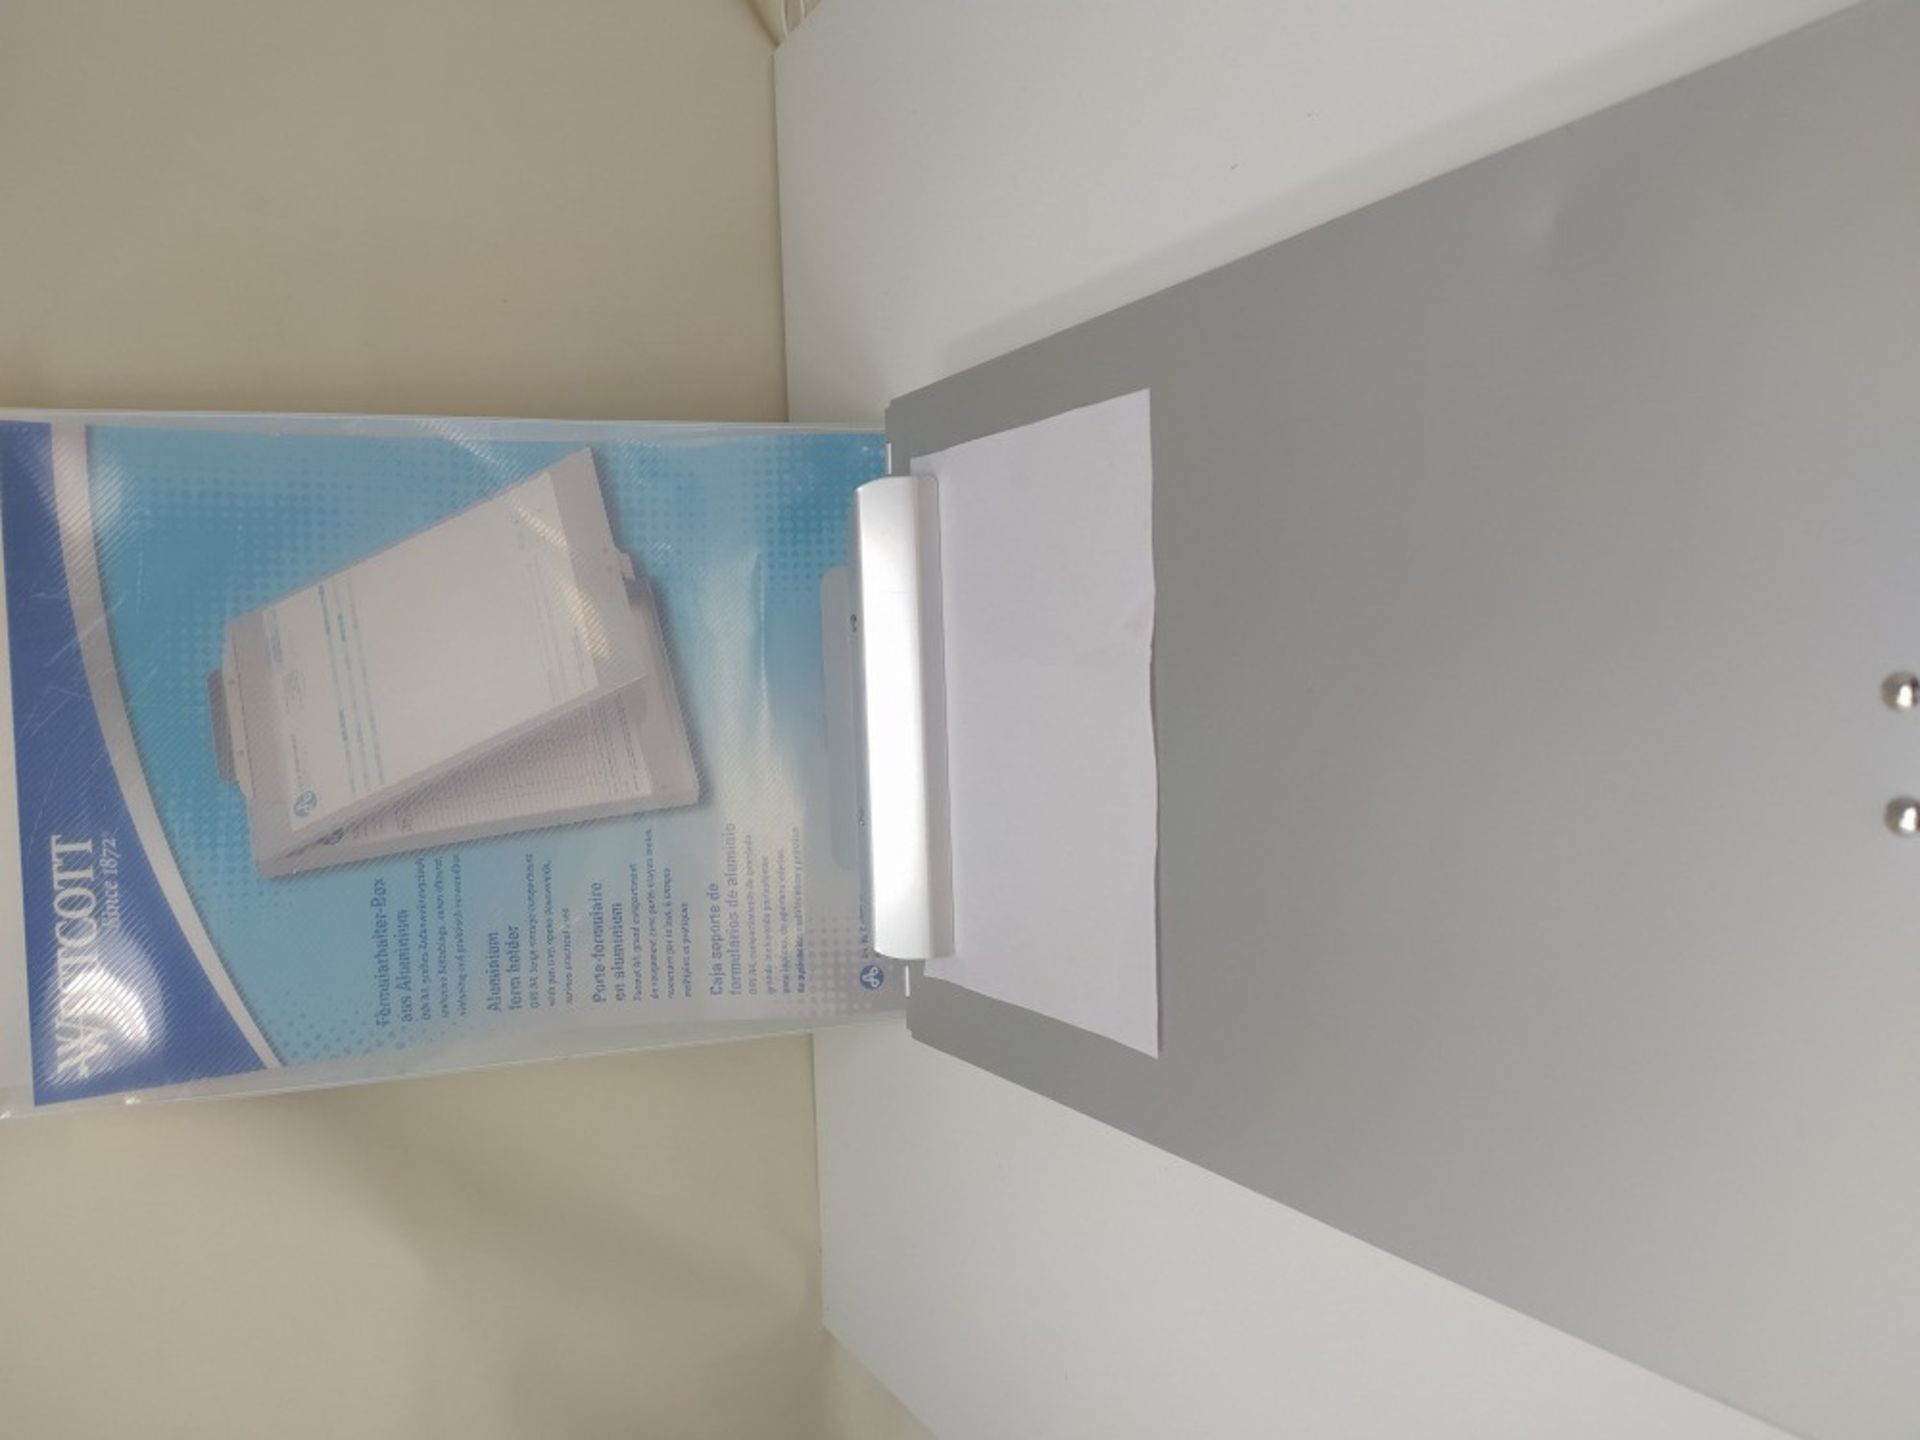 Westcott E-17003 00 Aluminium form holder box, A4, large storage compartment, bottom o - Image 2 of 2